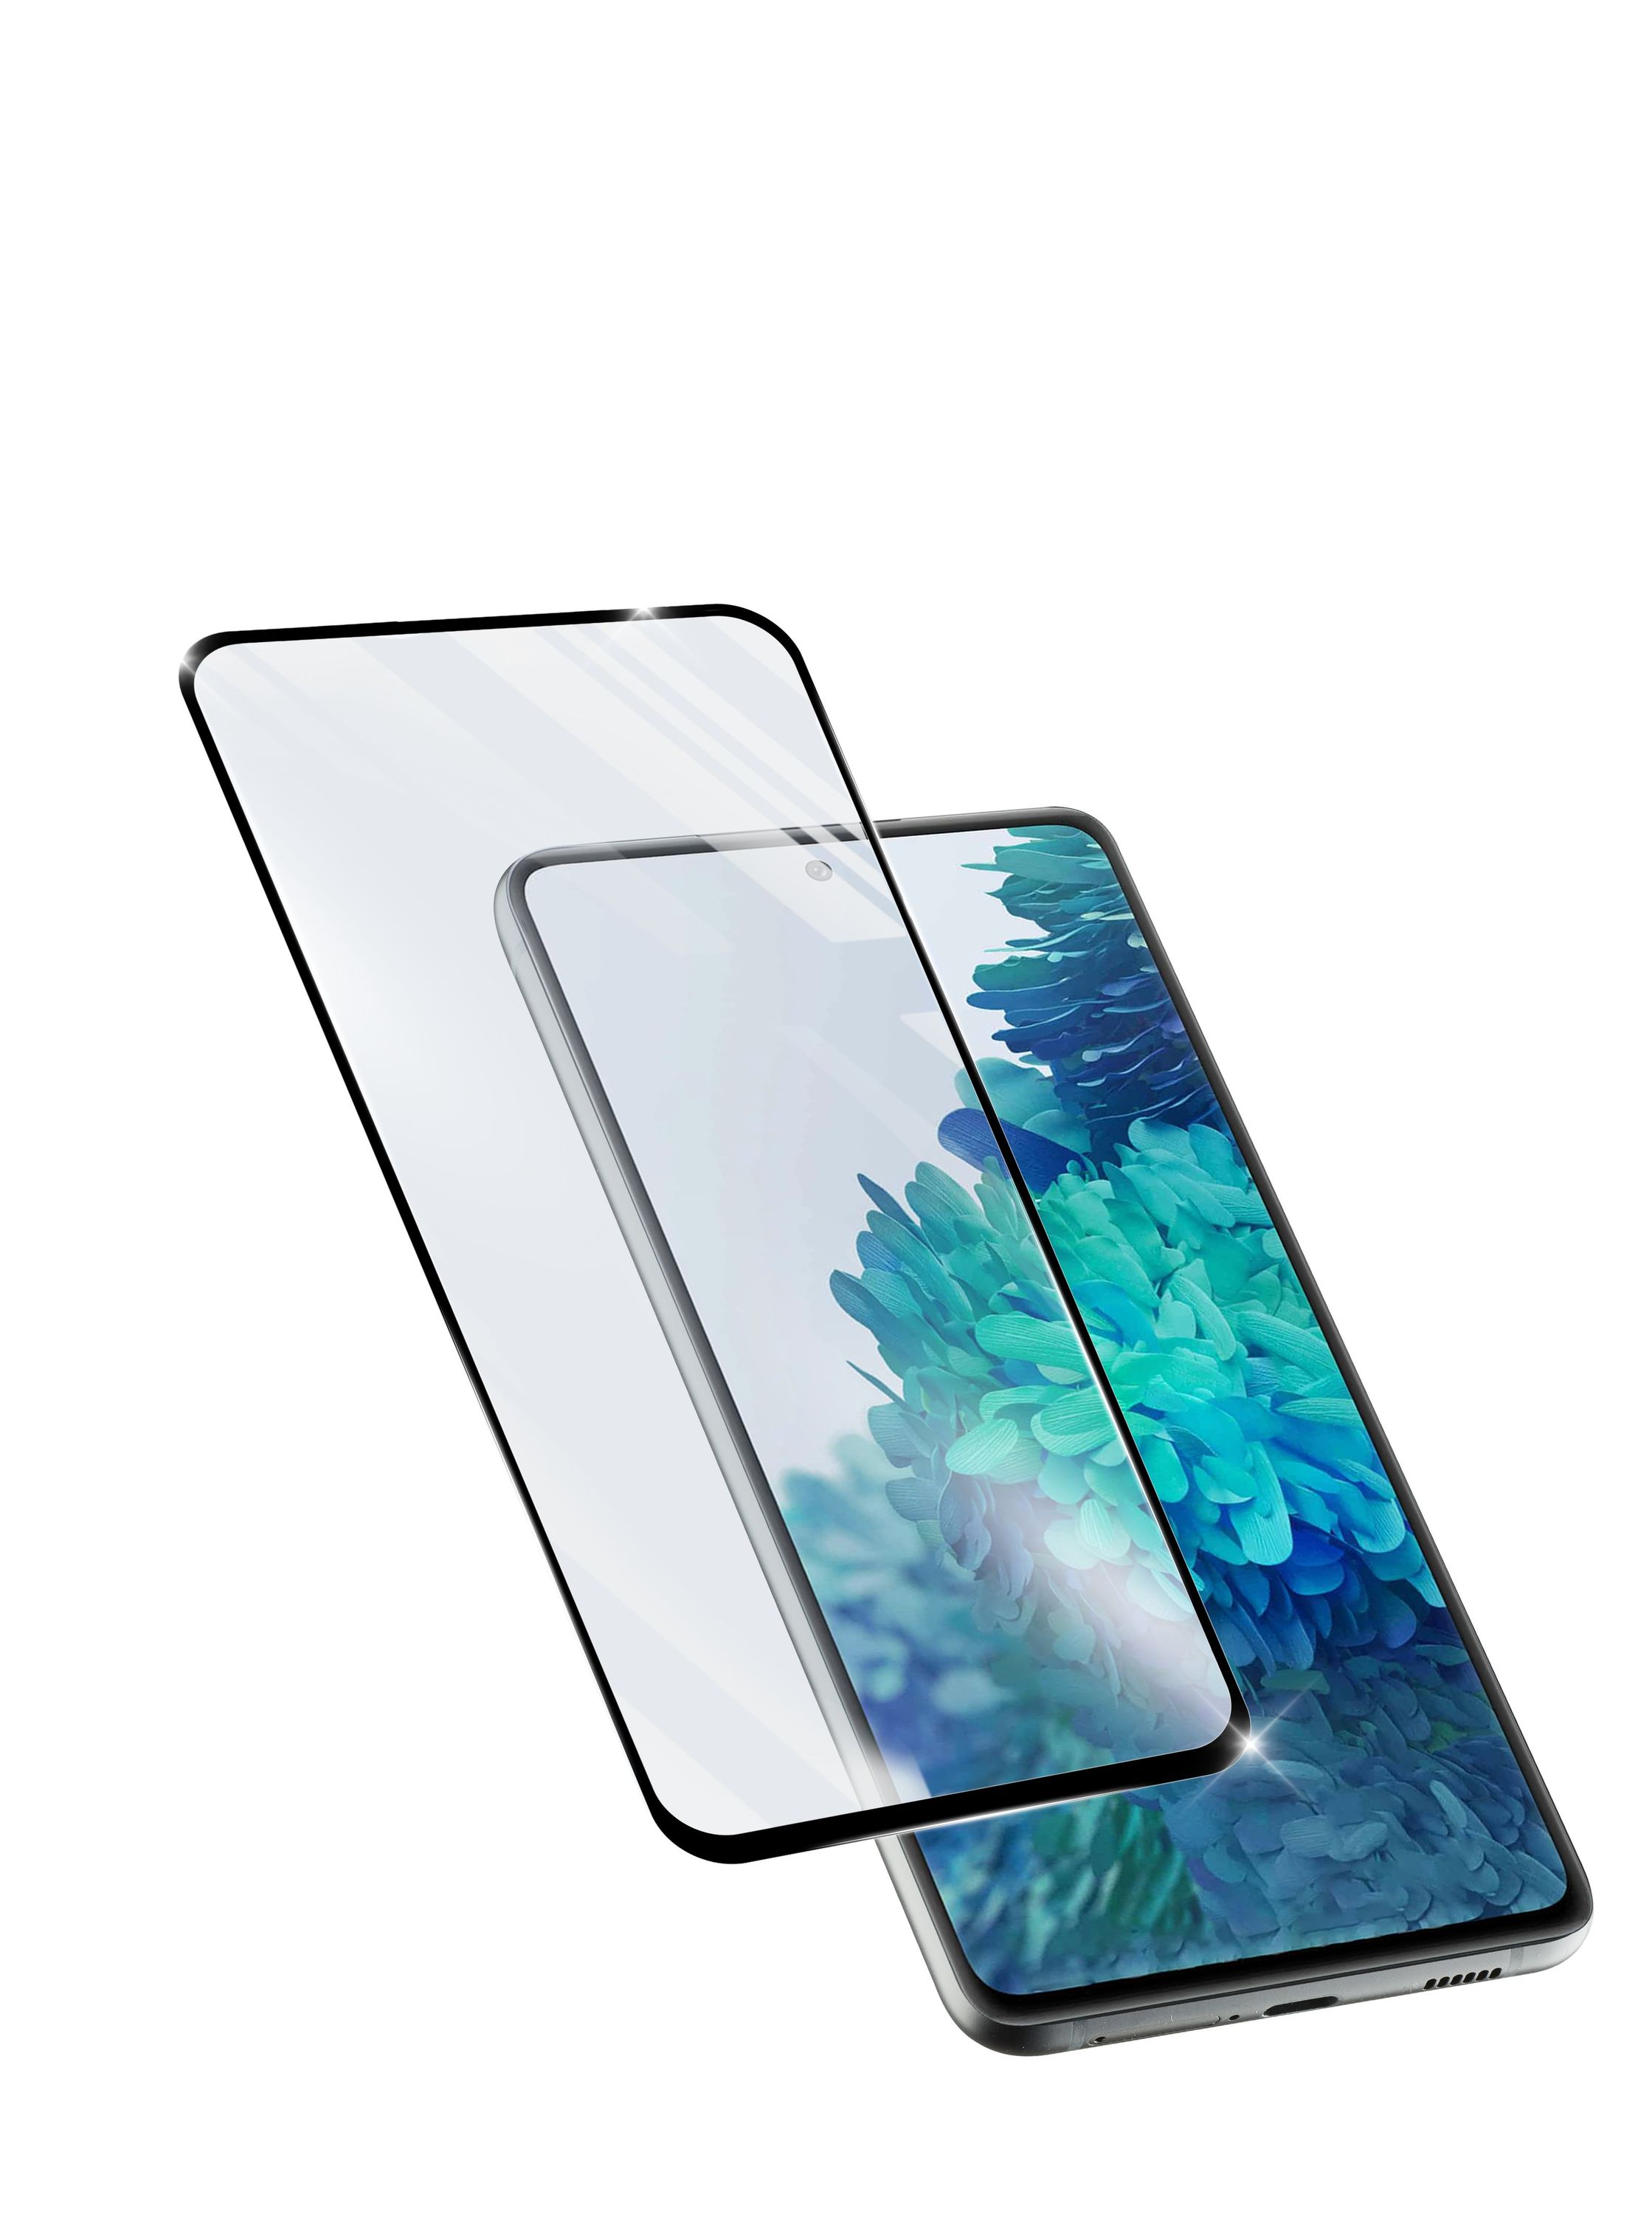 Impact Glass Capsule - Galaxy S20 FE, Smartphone display protection, Hüllen  und Zubehör